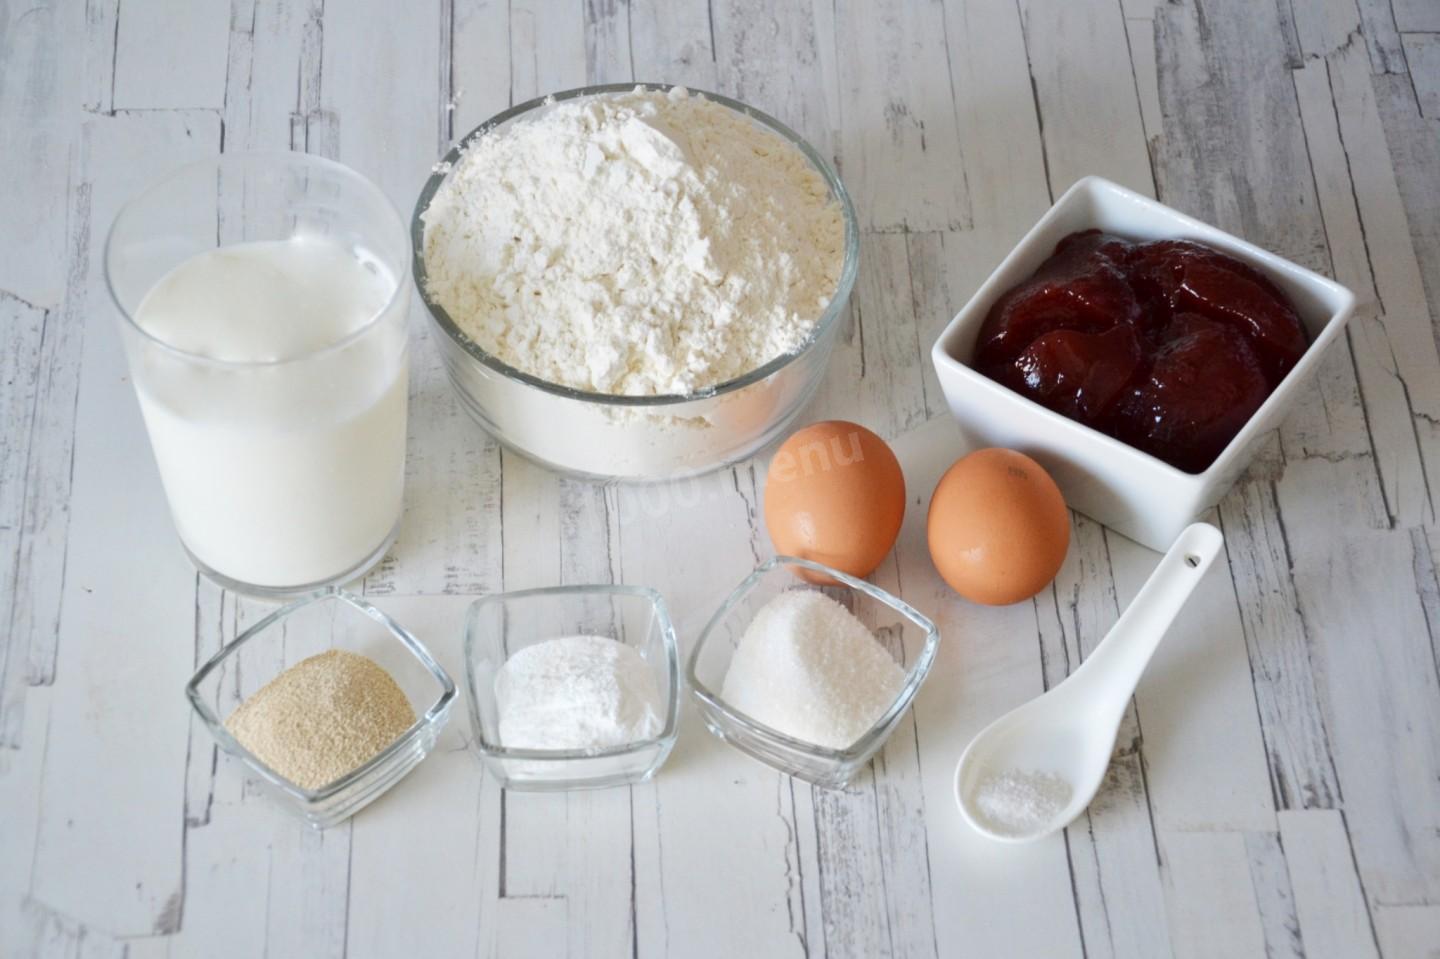 Приготовление теста ингредиенты. Молоко с тестом блюдо. Набор продуктов яйца мука капуста сахар повидло.